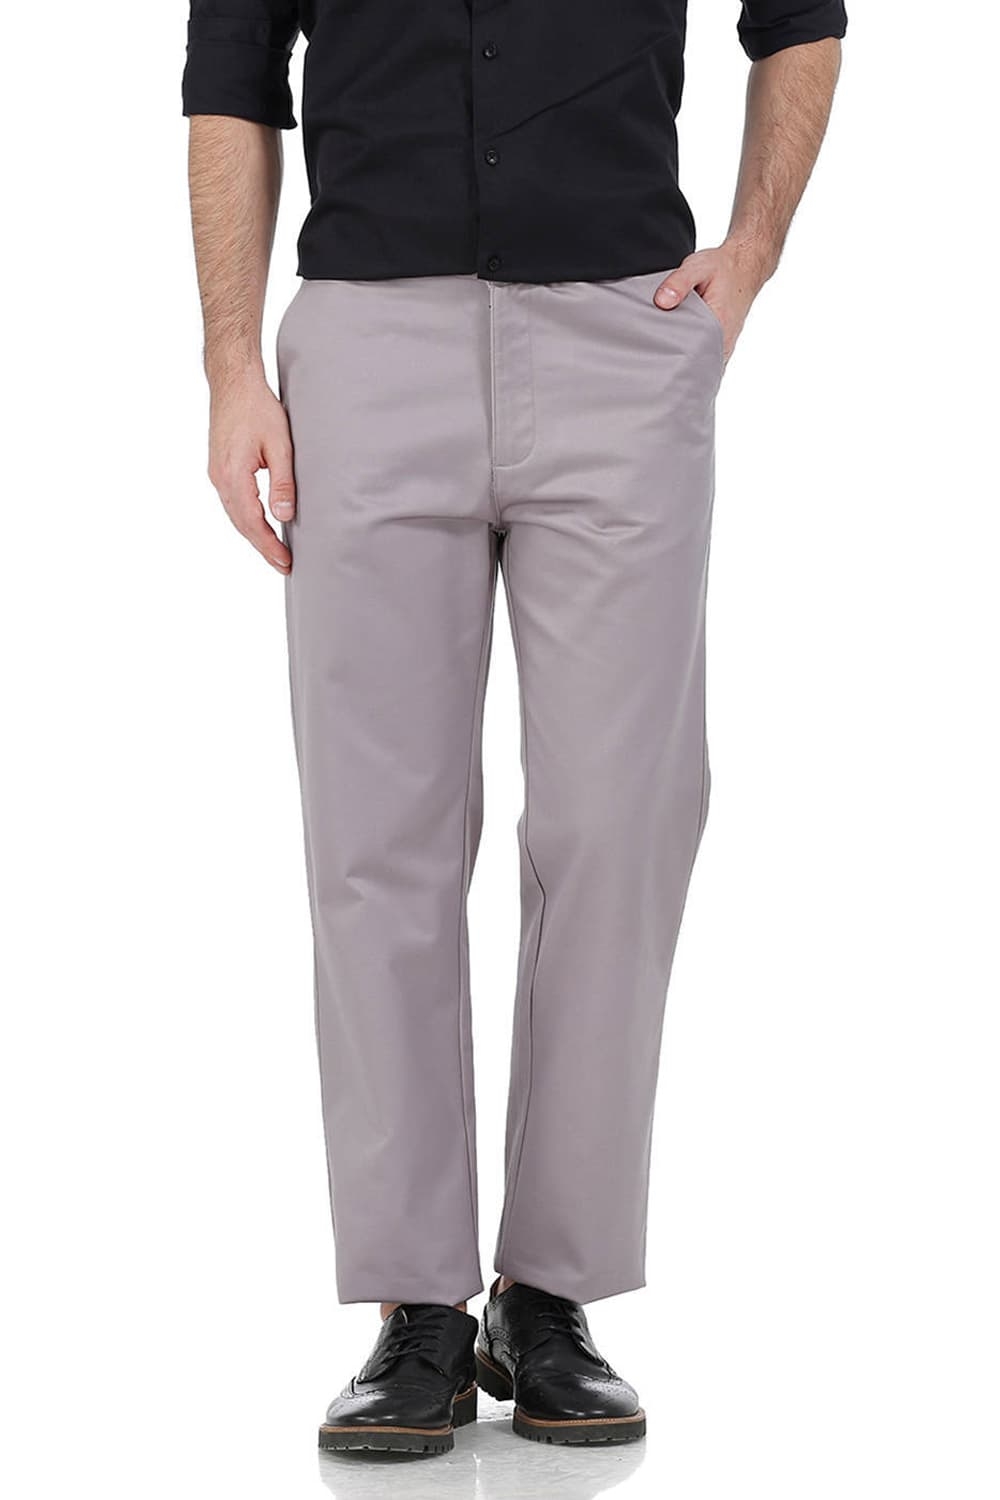 Basics | Basics Comfort Fit Grey Satin Weave Poly Cotton Trousers